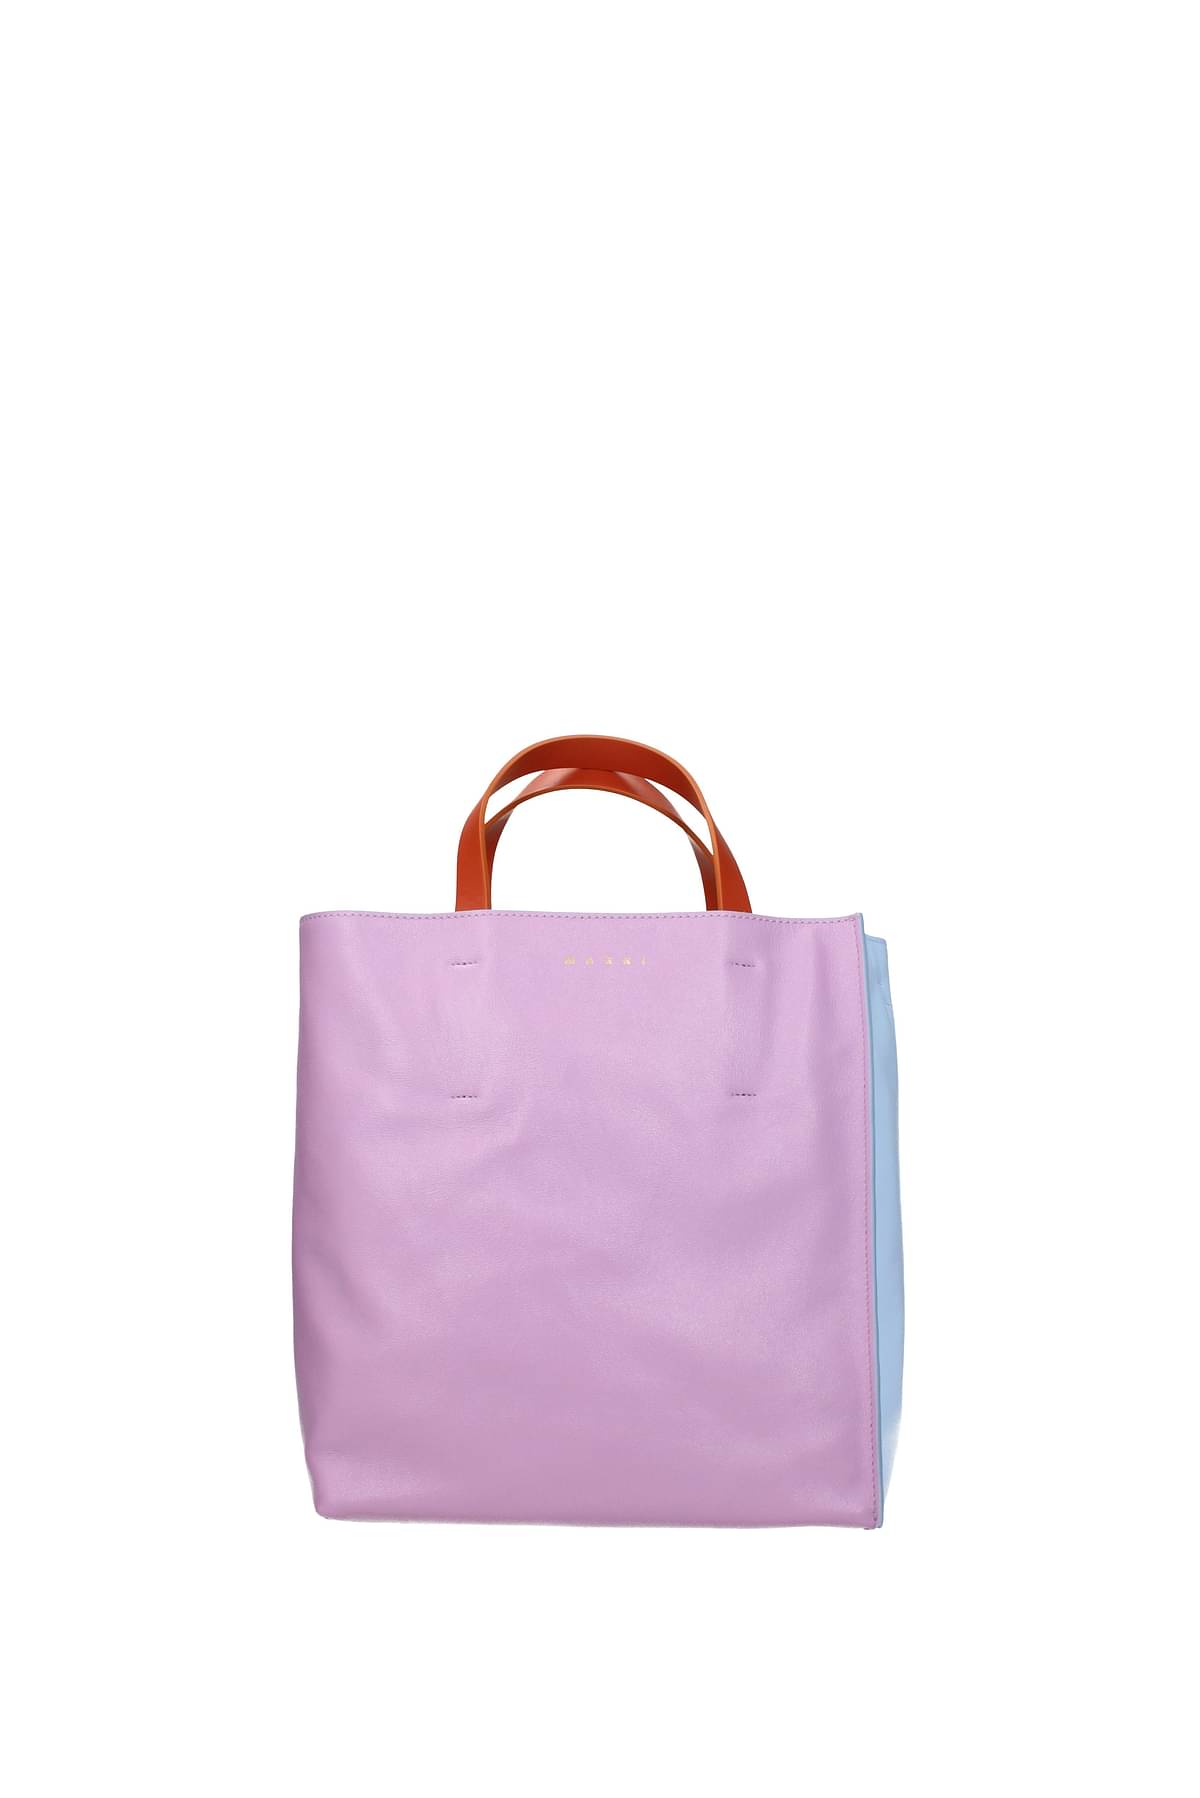 MARNI MARKET BASKET bag in multicolor pale blue woven material